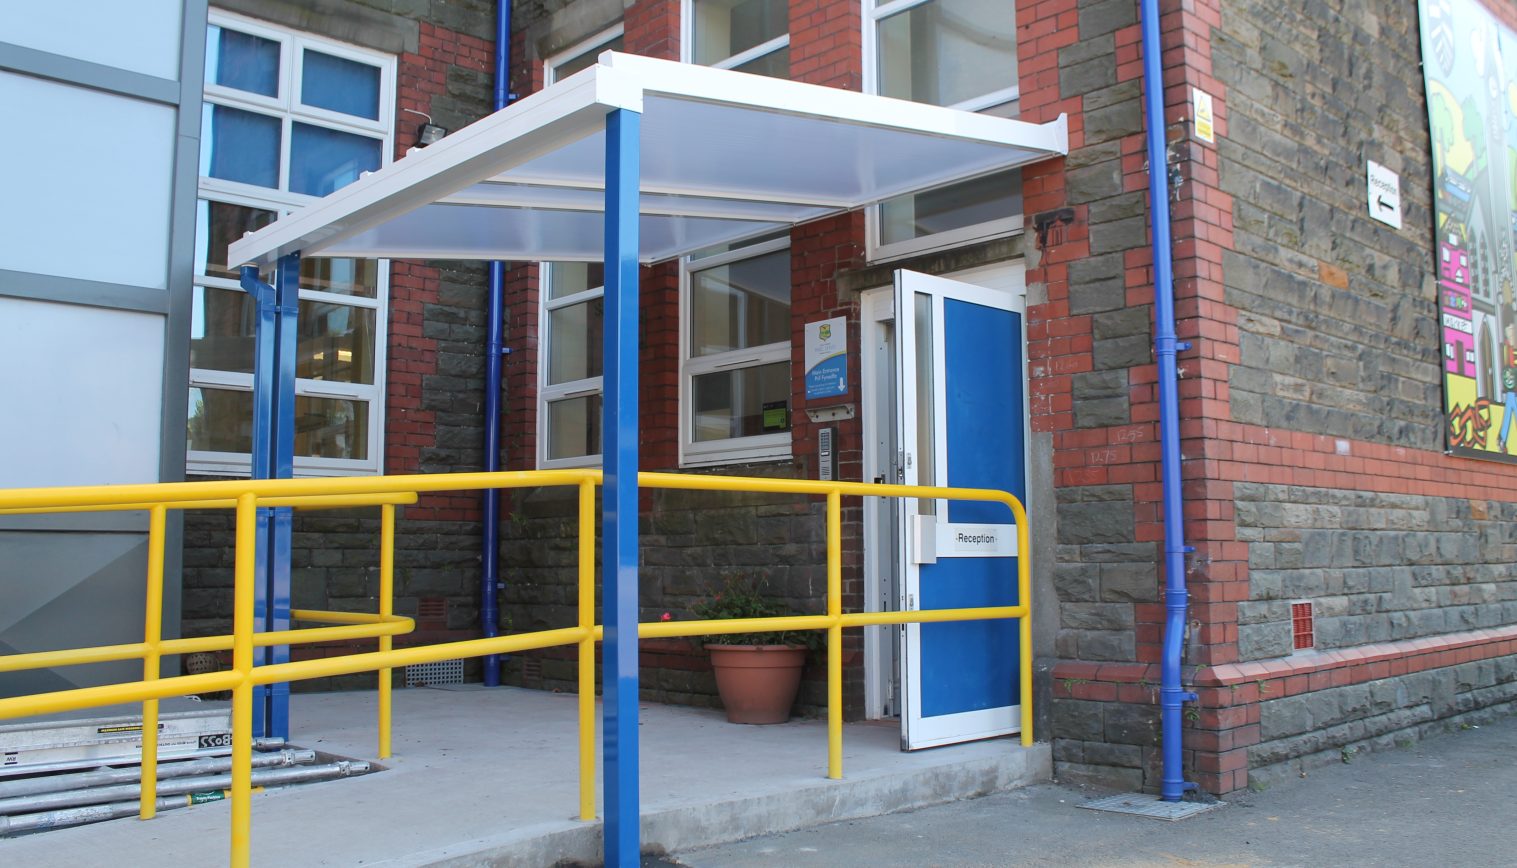 Parc Lewis Primary School